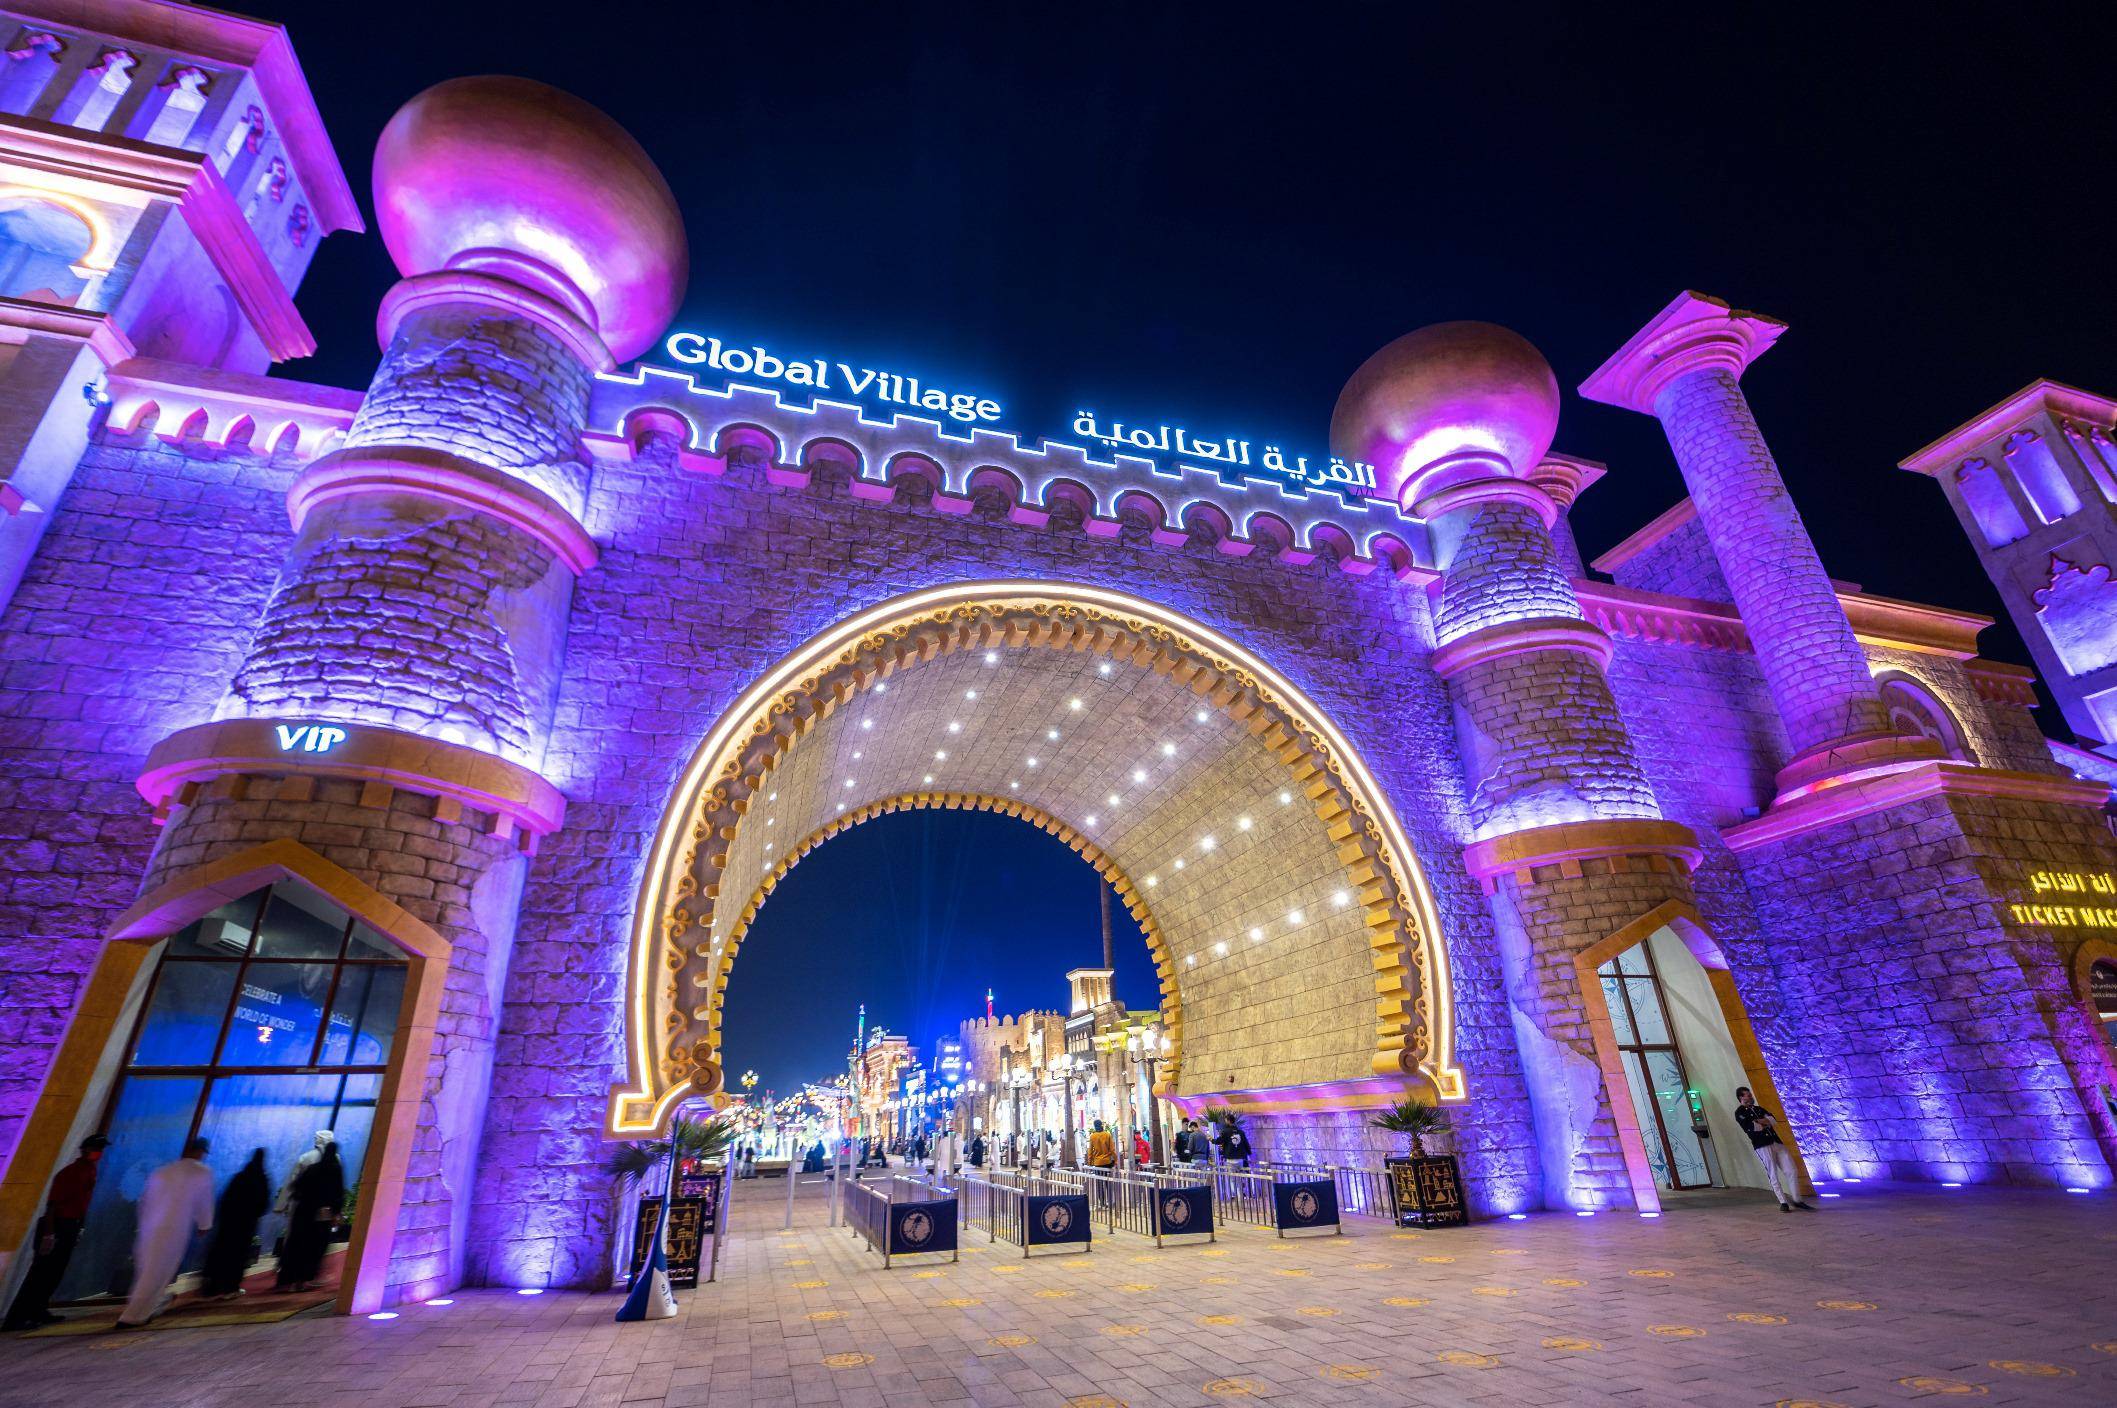 Dubai's Global Village announces opening date for new season - News